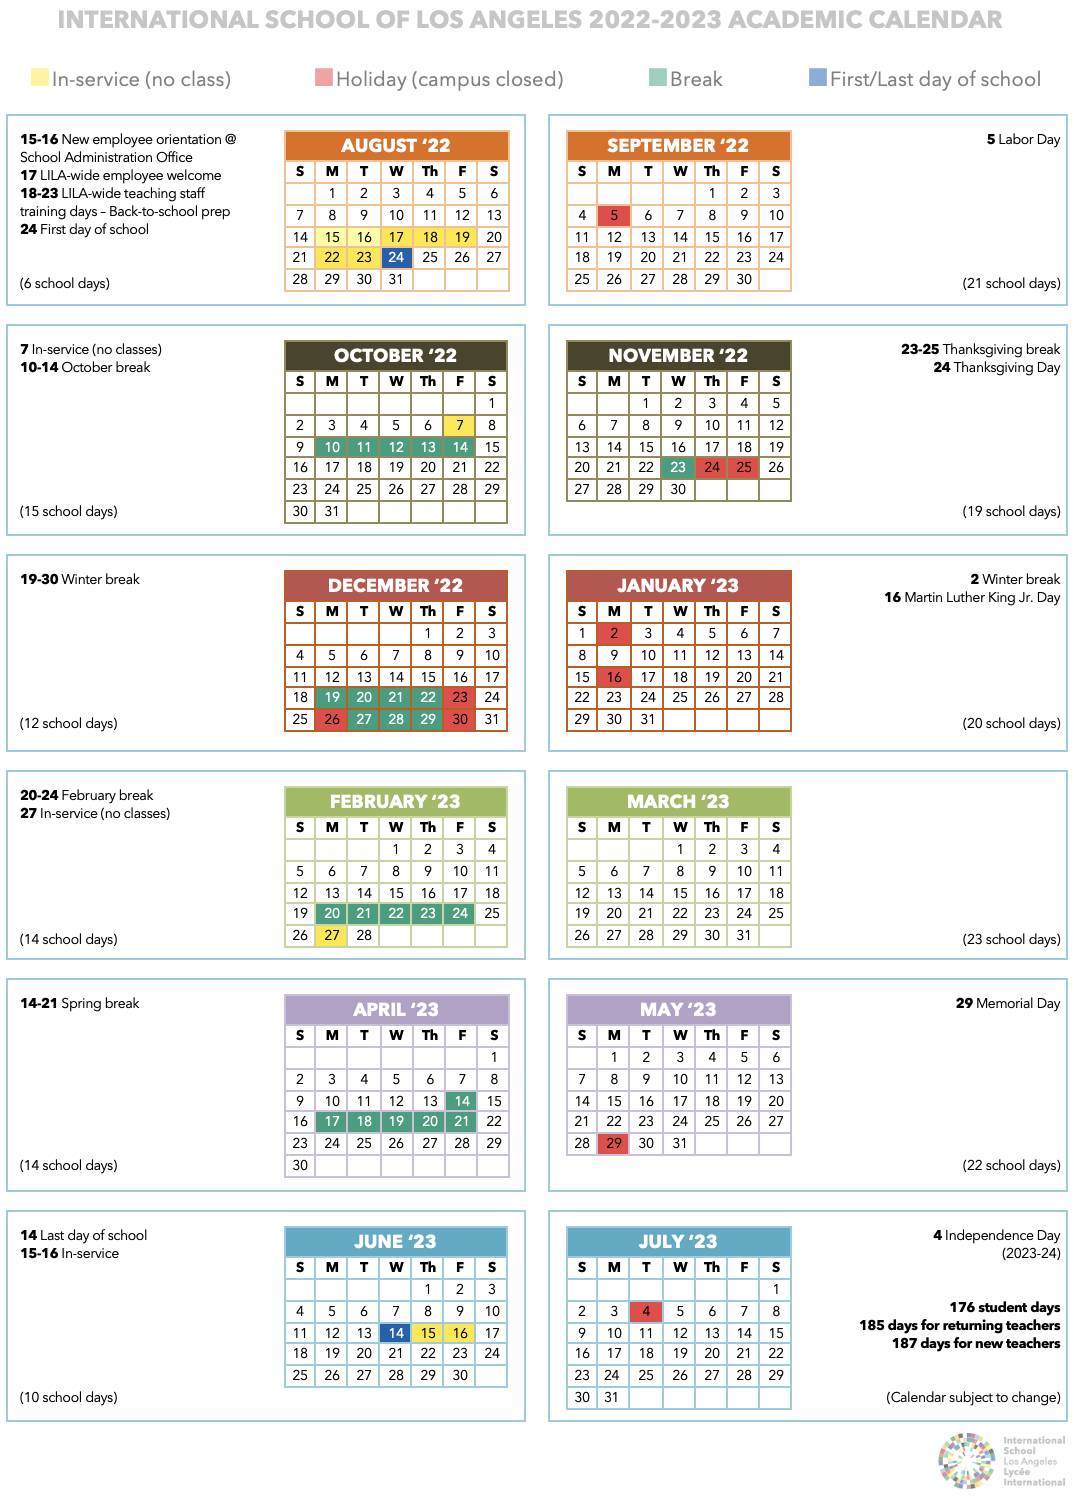 Csula Calendar 2022 Calendar | International School Of Los Angeles